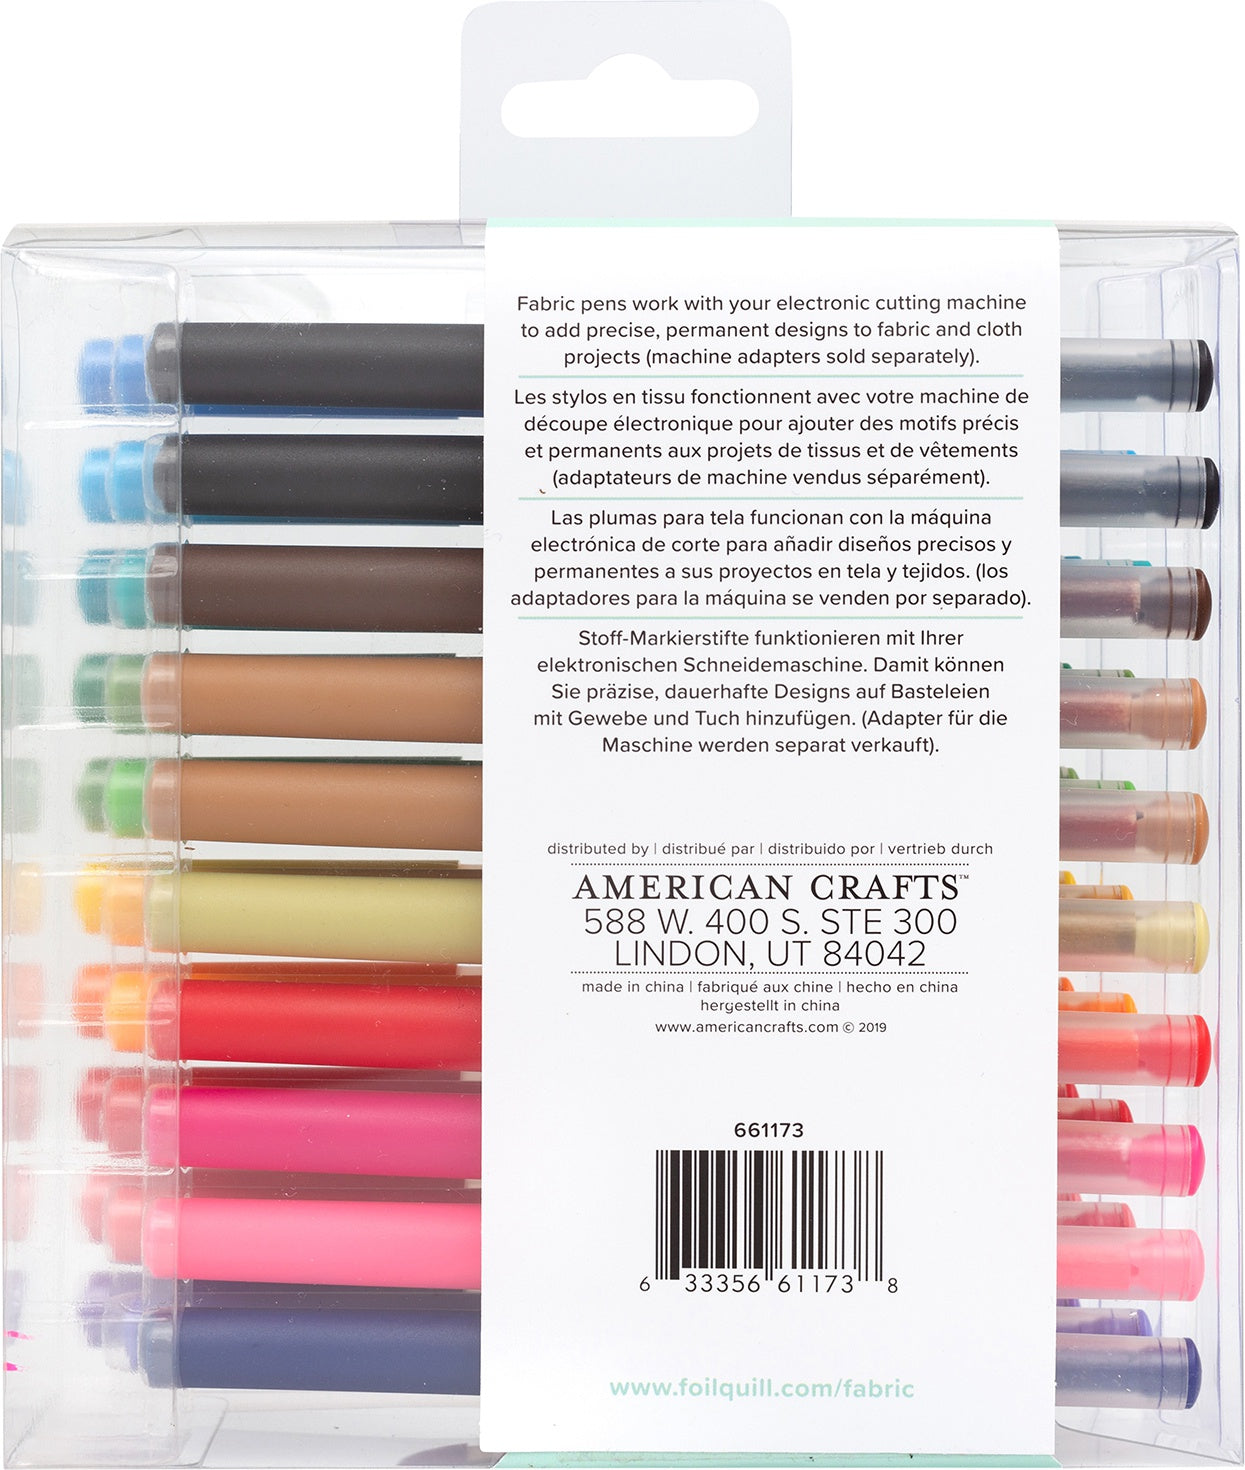 Pastel Pigment Pens - We R Memory Keepers